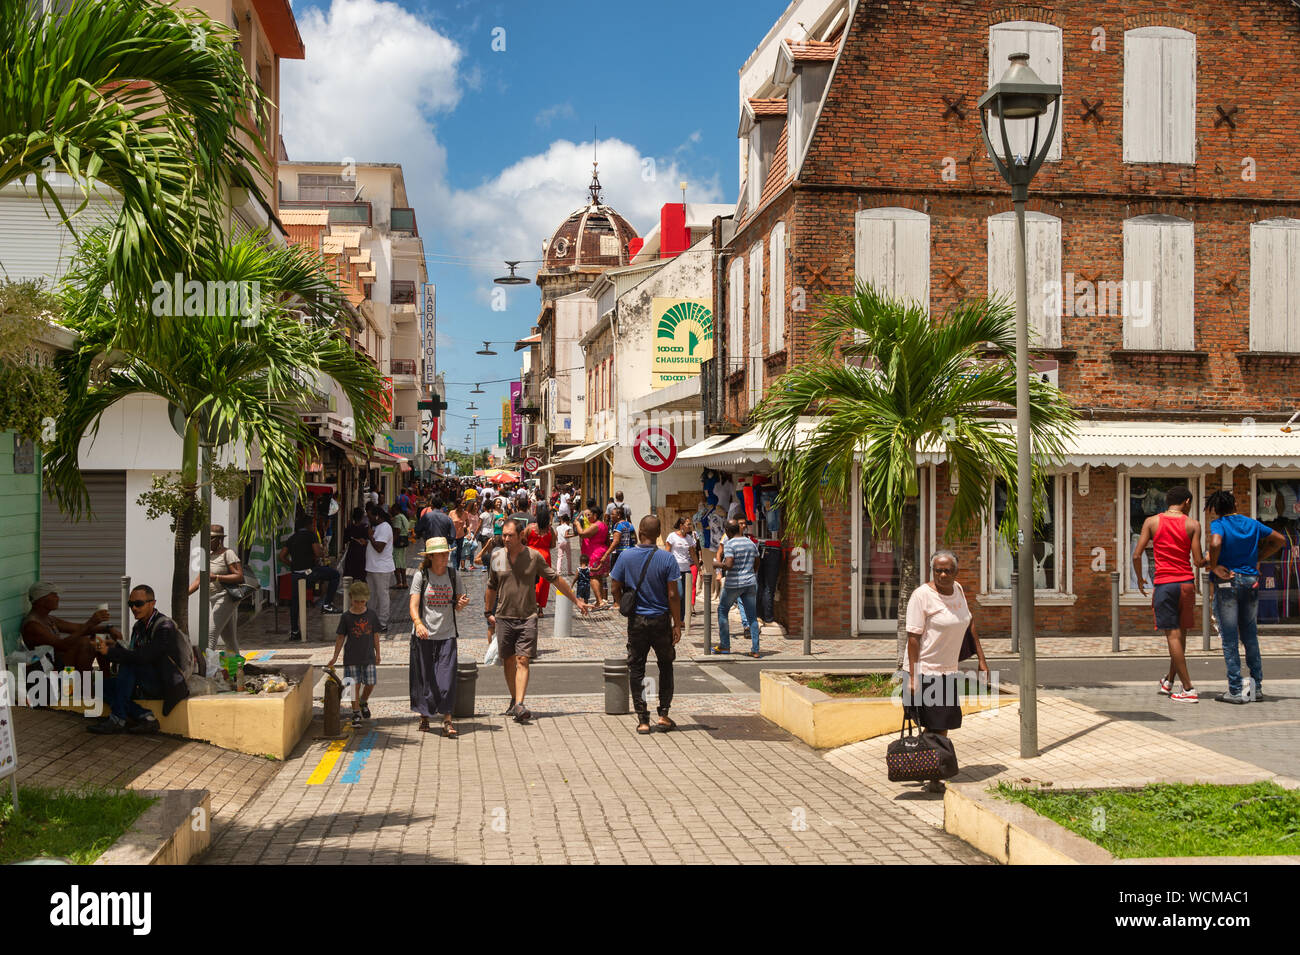 Fort-de-France, FR: 12. August 2019: Rue de la Republique in Fort-de-France, Martinique, West Indies, ist die wichtigste Geschäftsstraße. Stockfoto